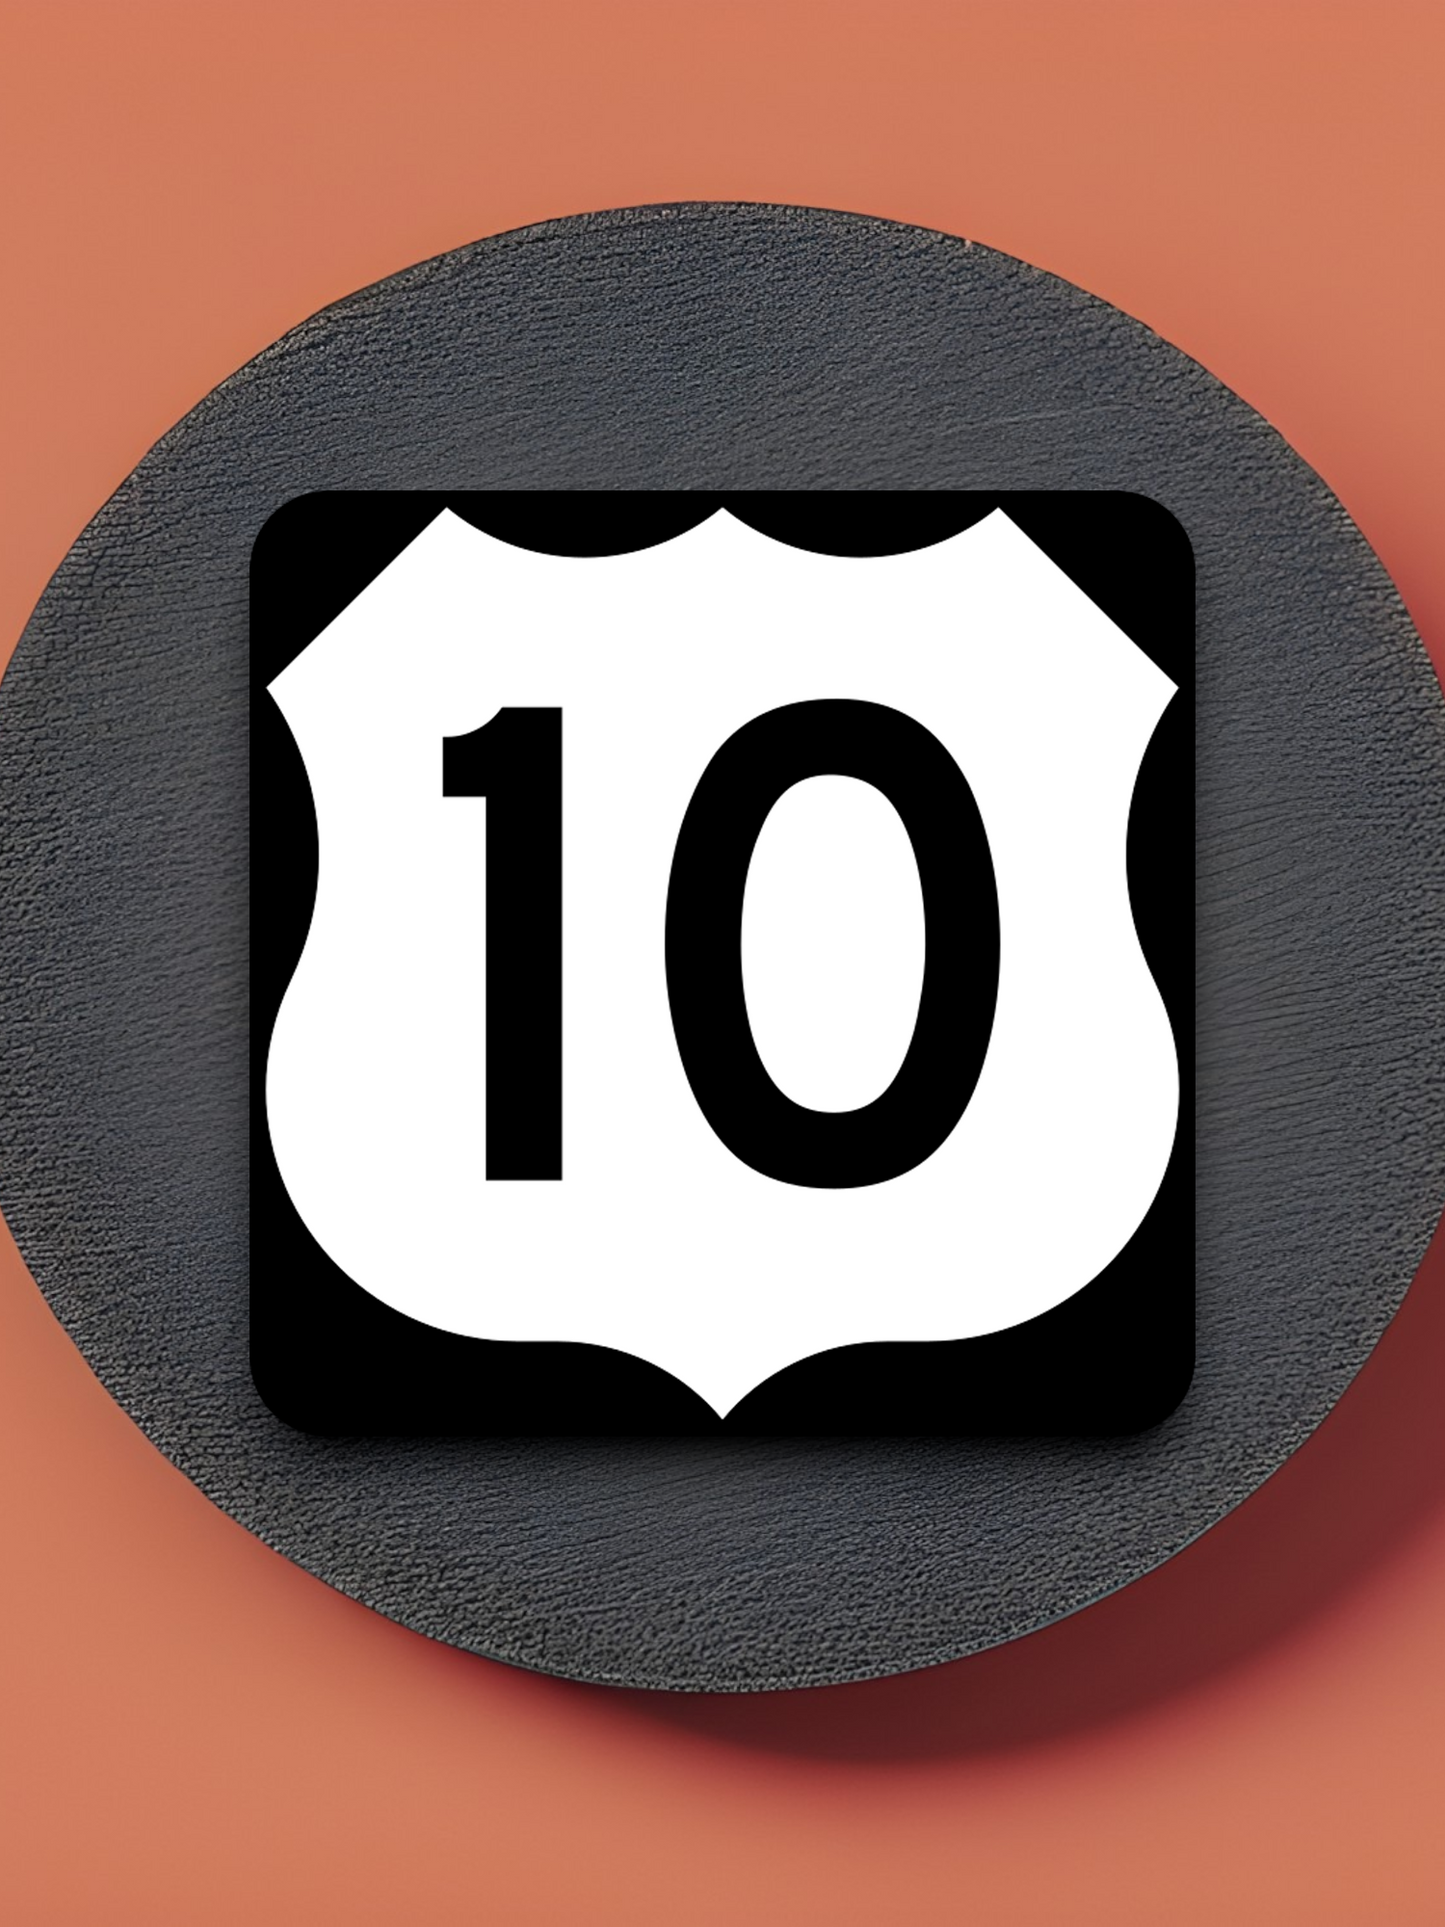 U.S. Route 10 Road Sign Sticker